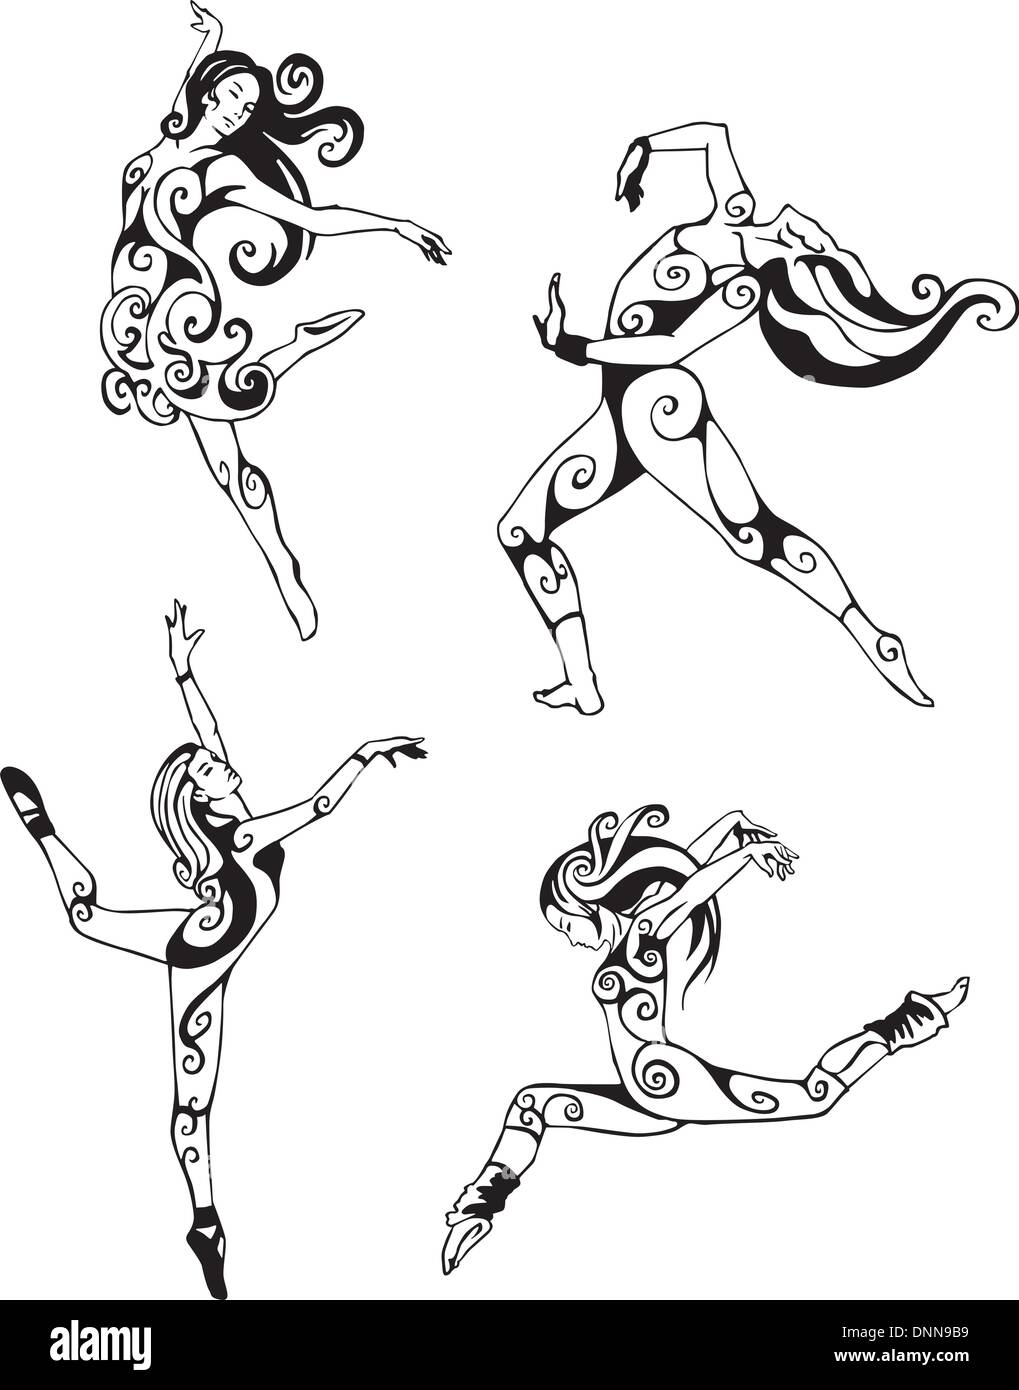 Women in modern dance. Set of black and white vector illustrations. Stock Vector